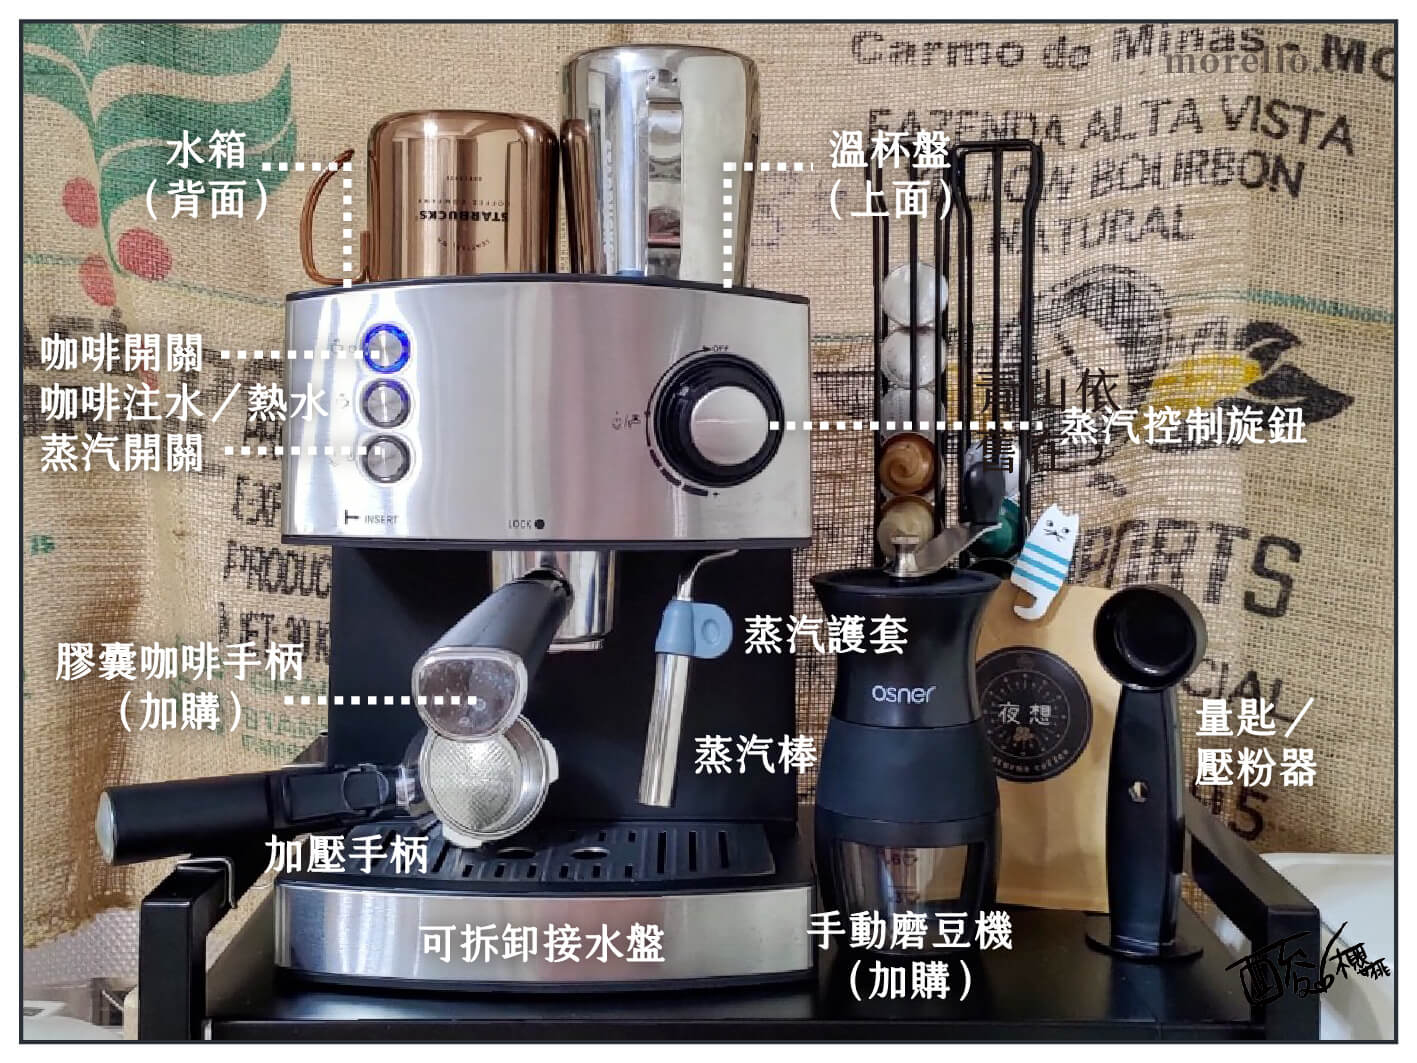 YIRGA CLASSIC 半自動義式咖啡機 功能圖